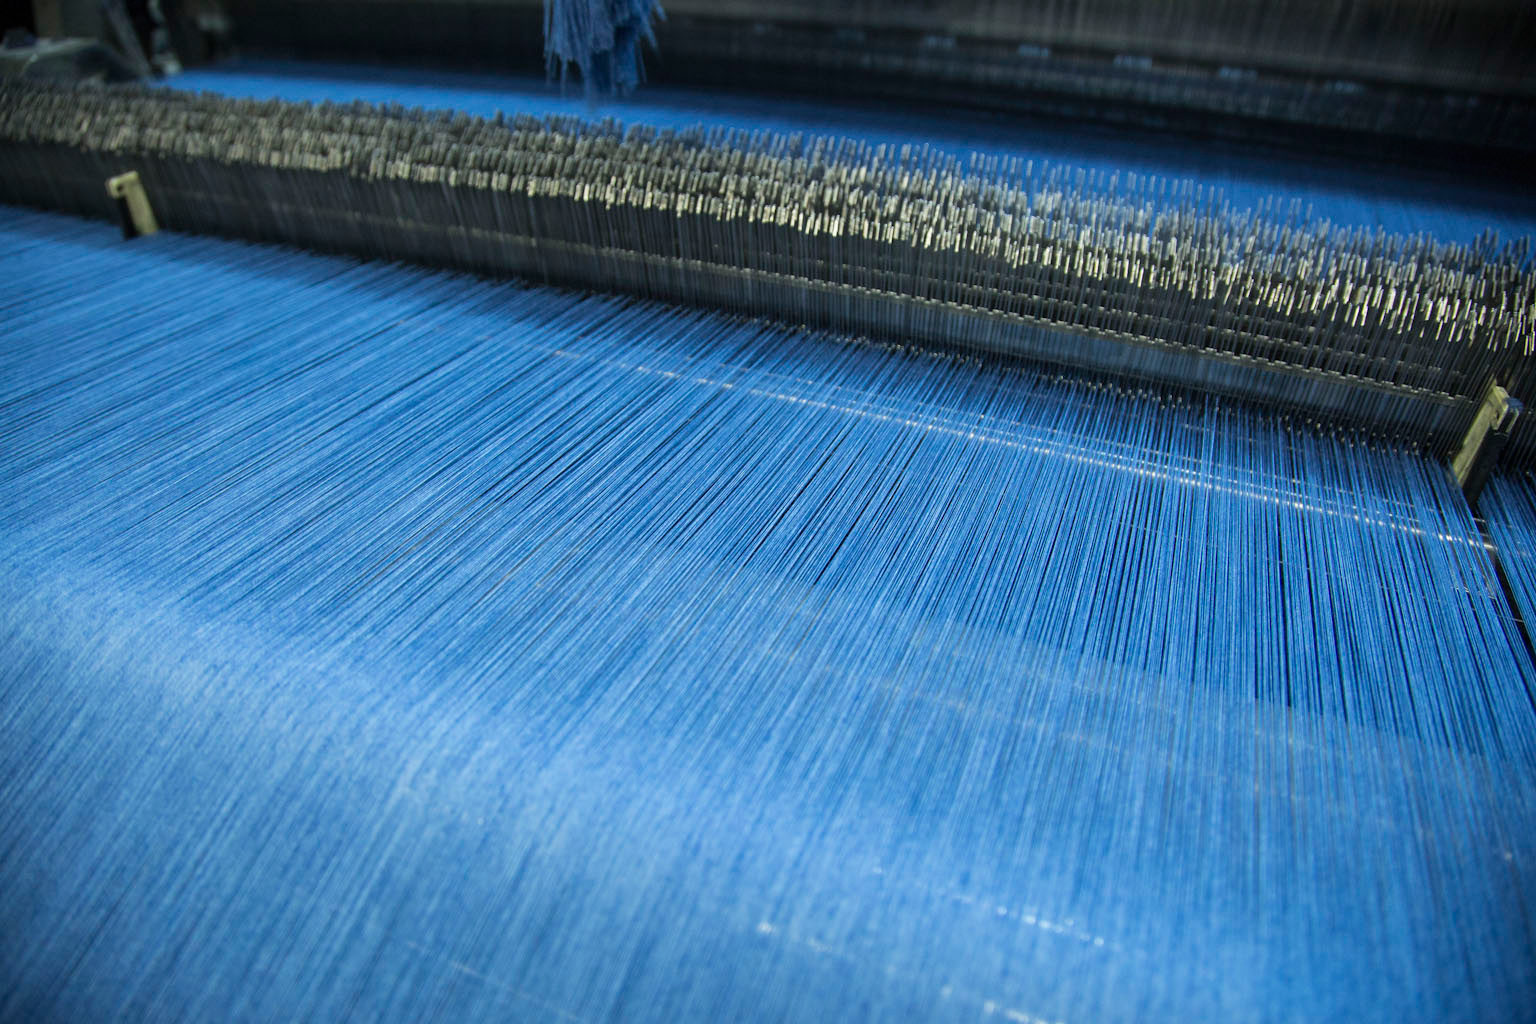 Производство сукна. Материал для производства ткани. Изготовление ткани. Крашение ткани на производстве. Производители ткани.